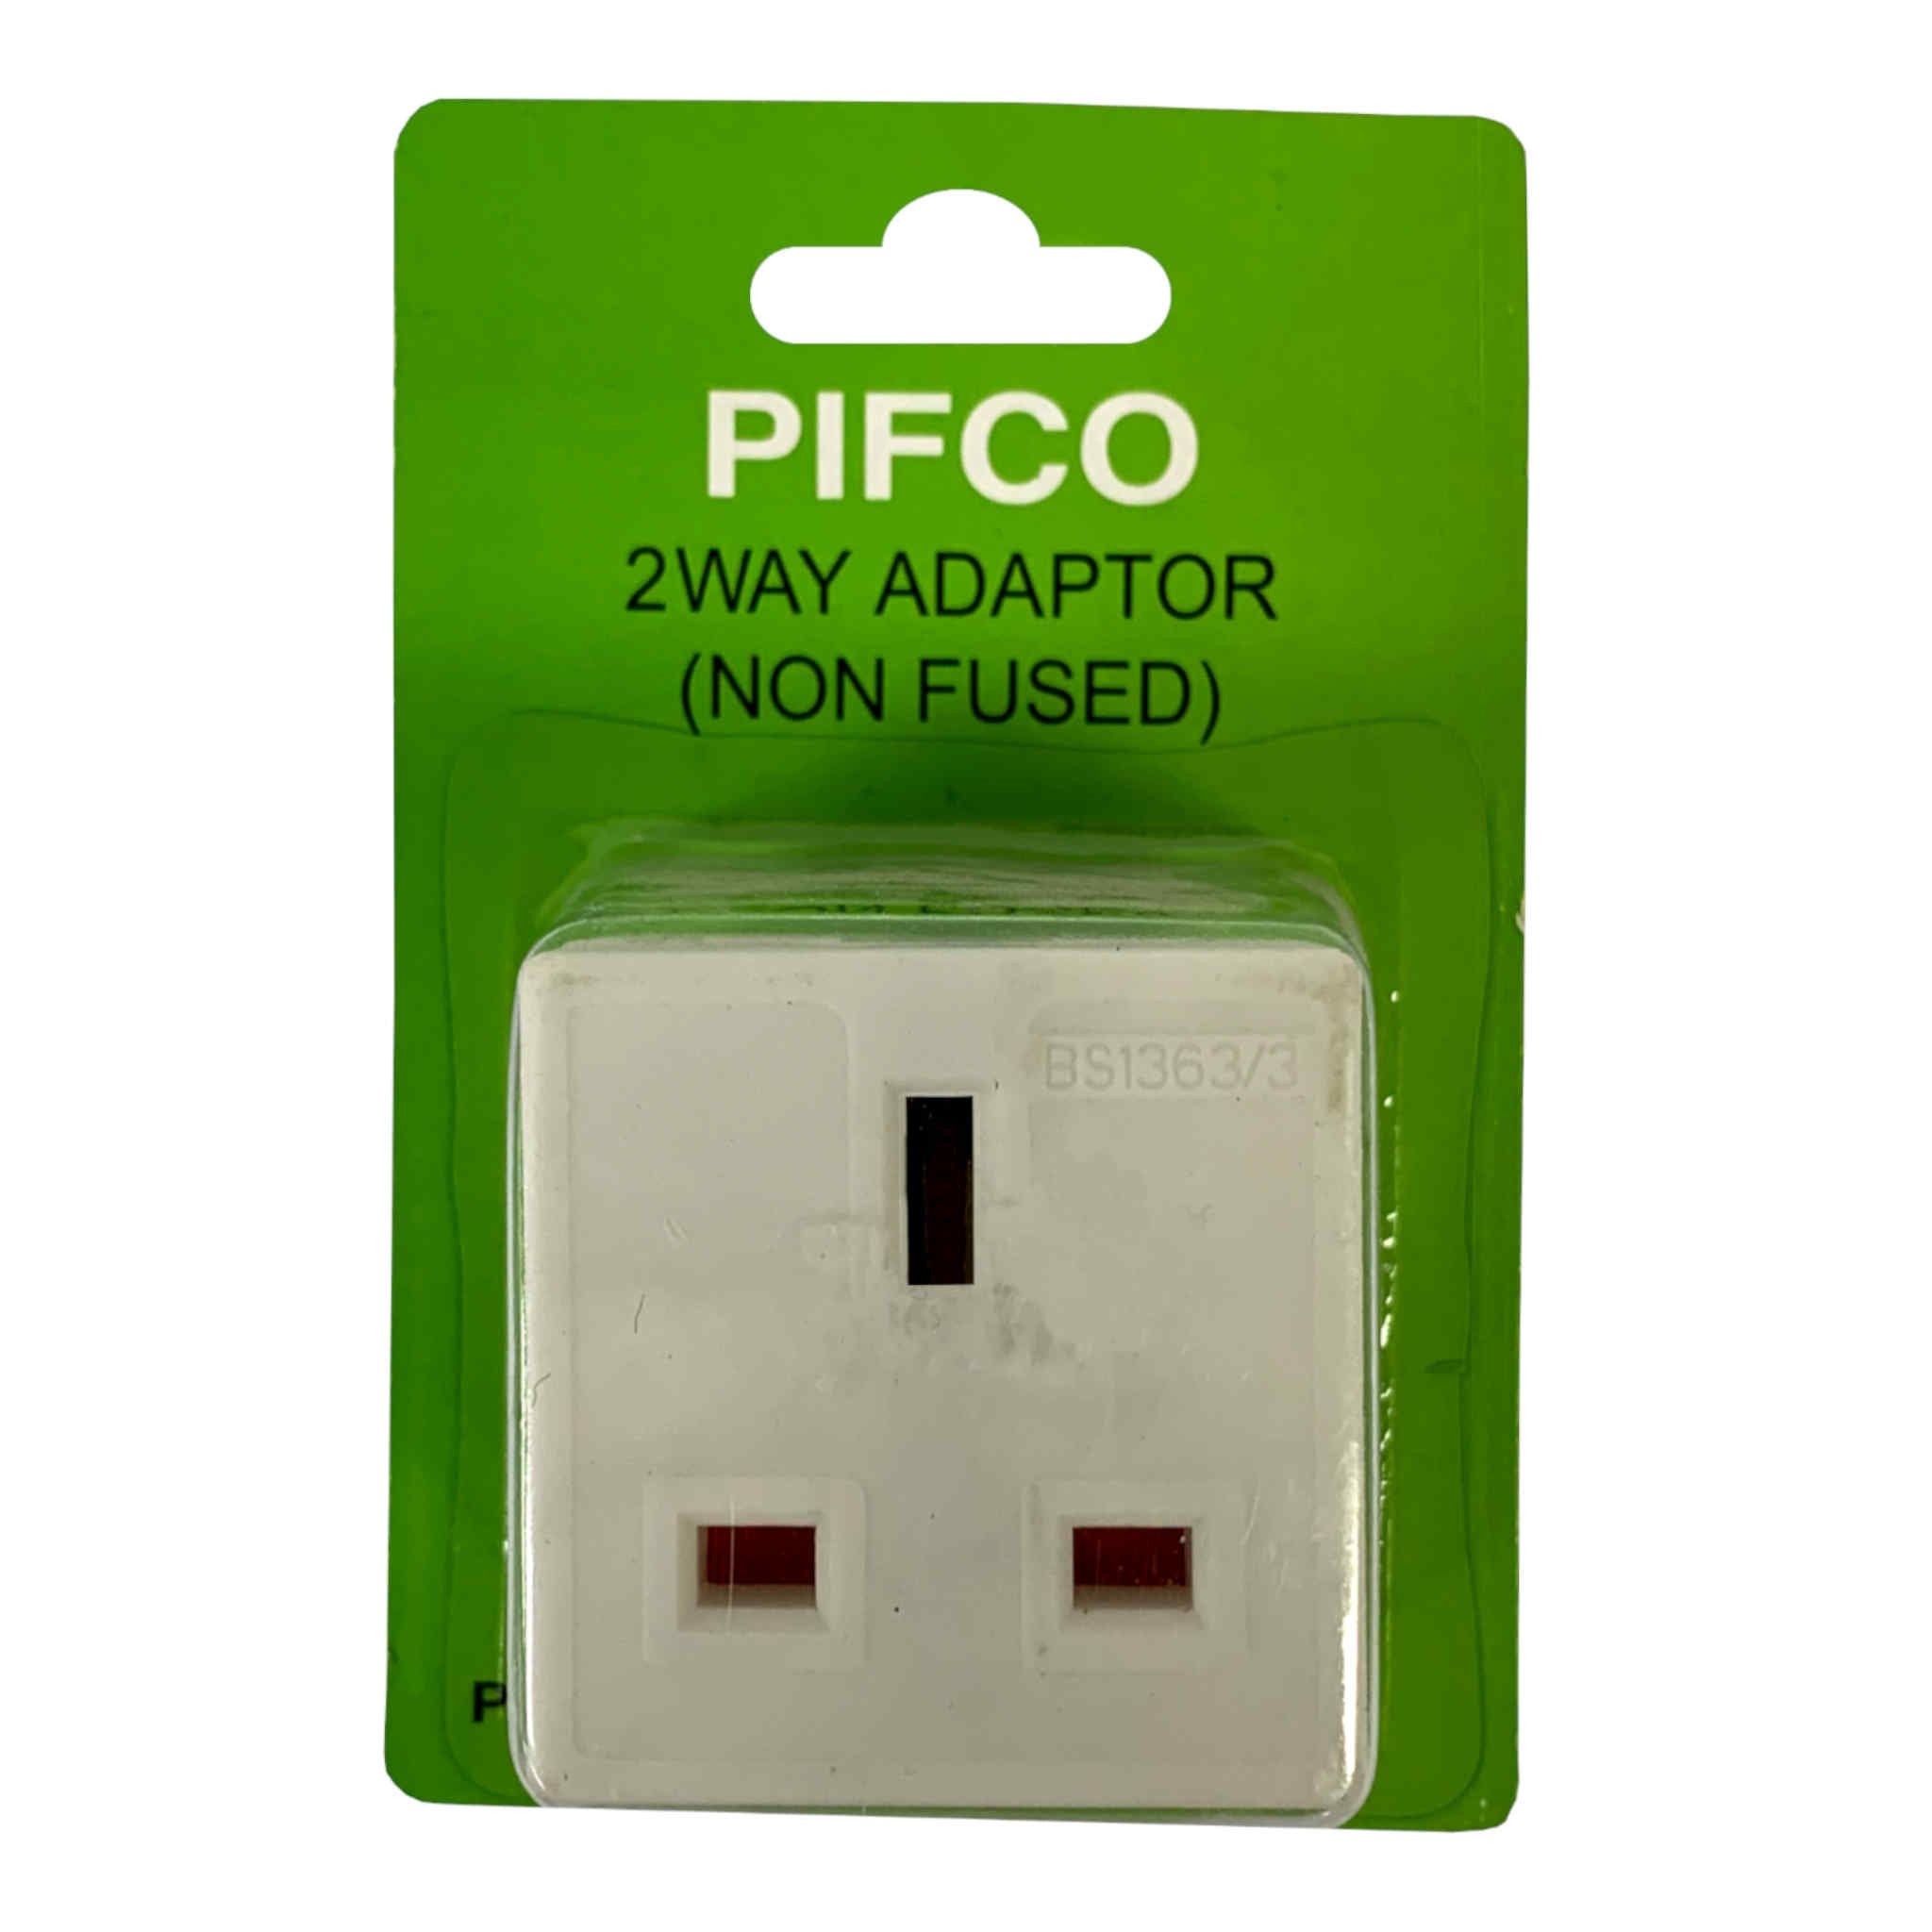 Pifco 2 Way Adaptor | Non Fused